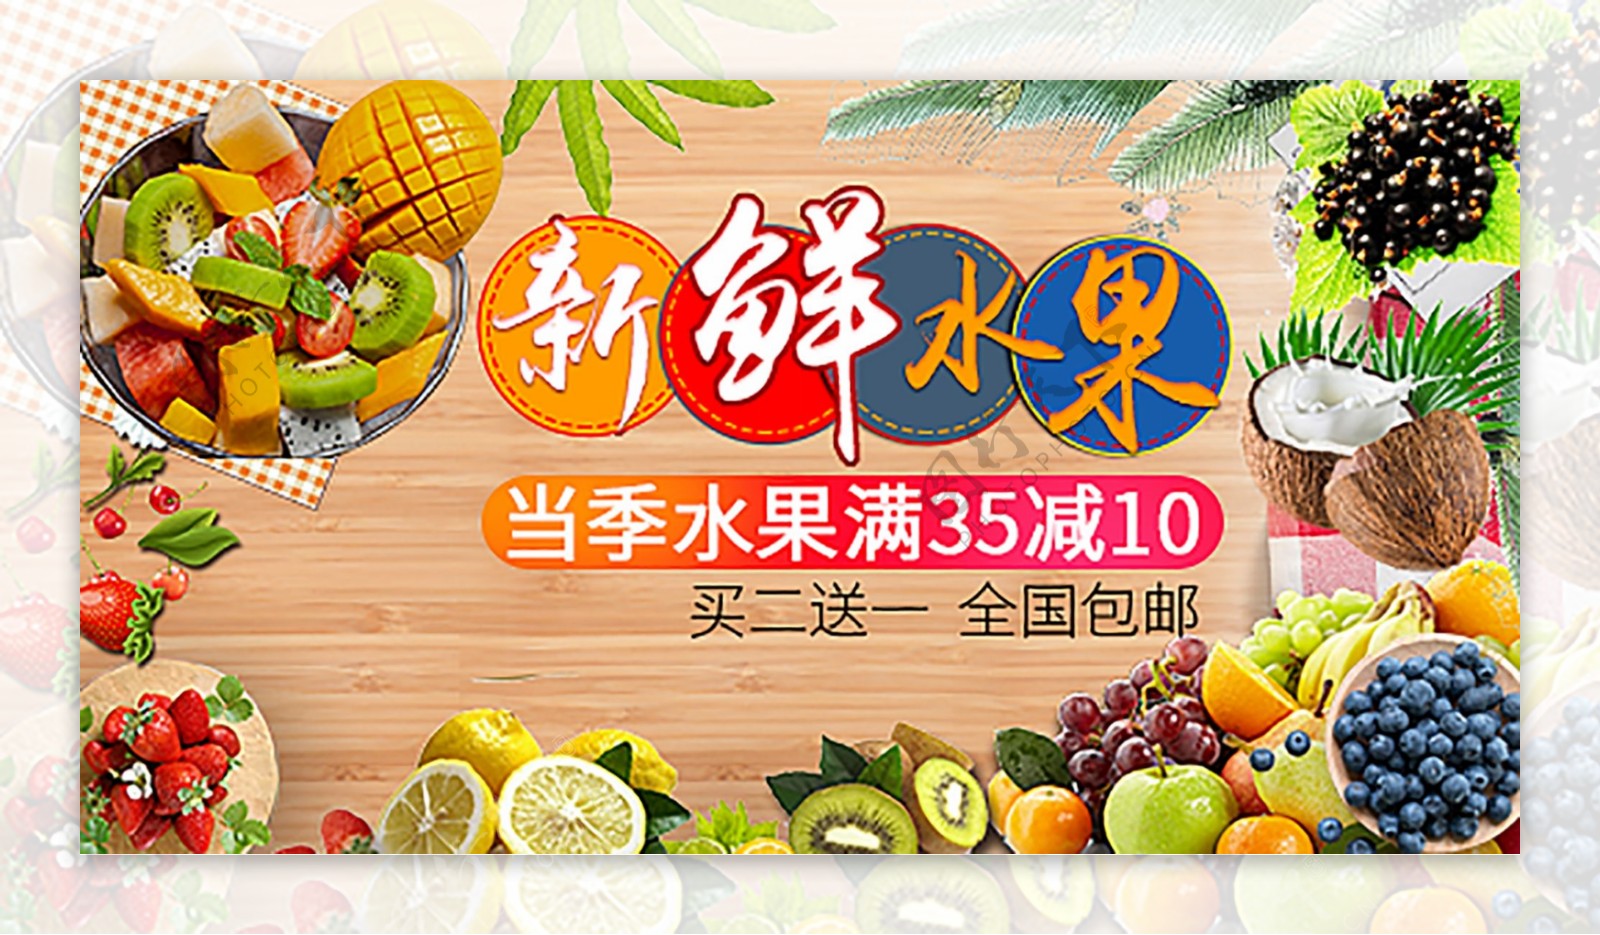 新鲜水果促销水果banner海报模板